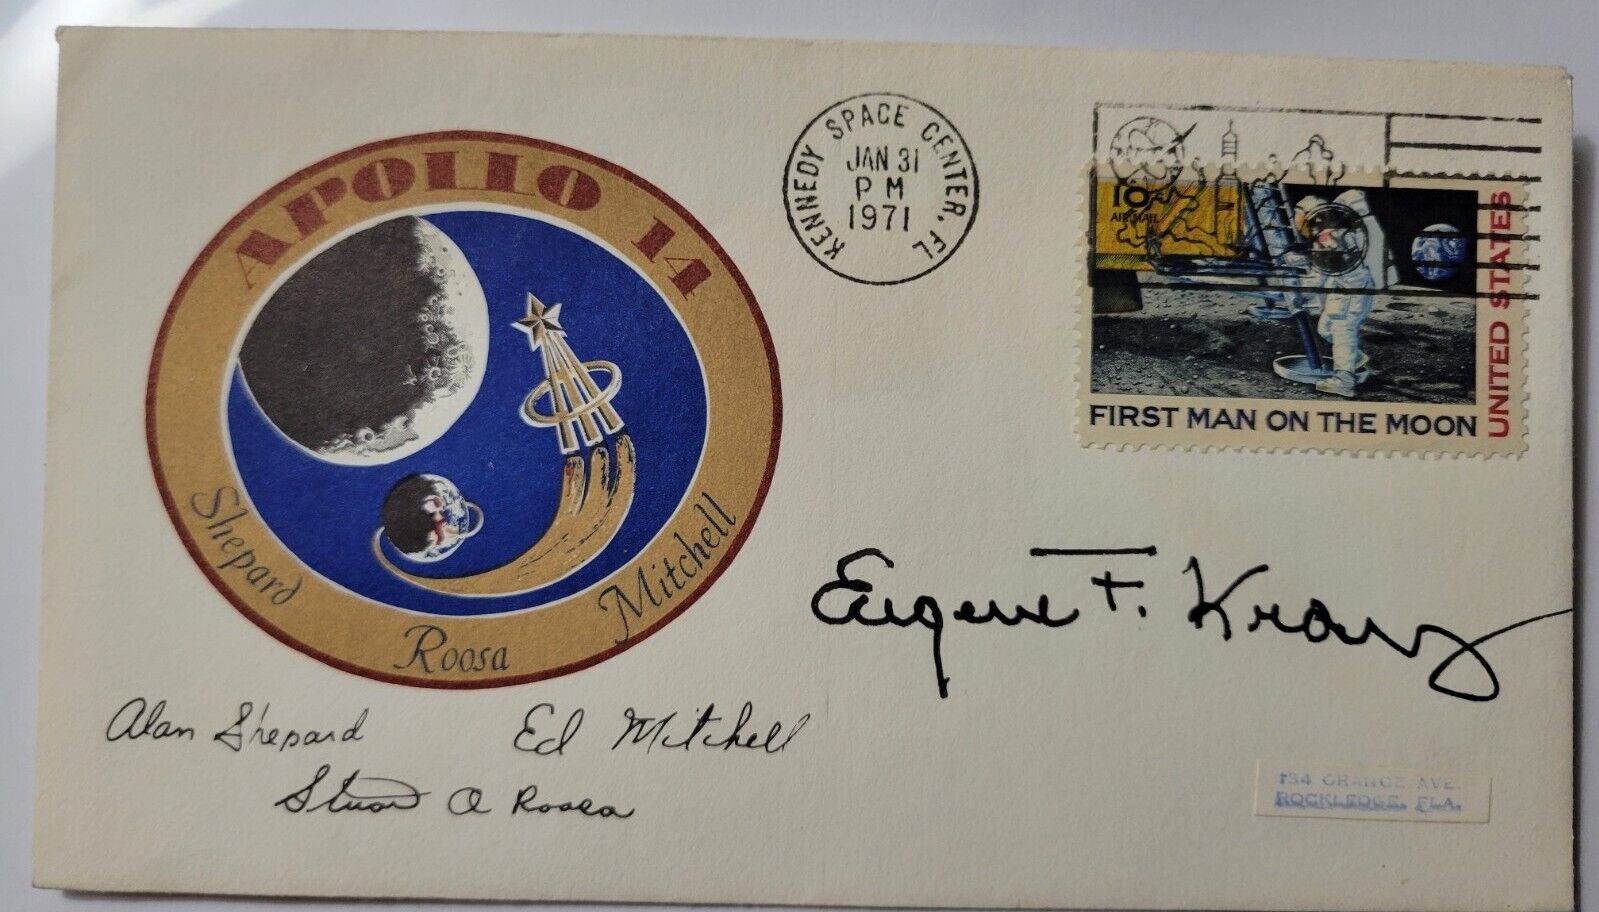 Eugene Kranz SIGNED Apollo 14 Postal Cover January 31, 1971 3rd MOON LANDING